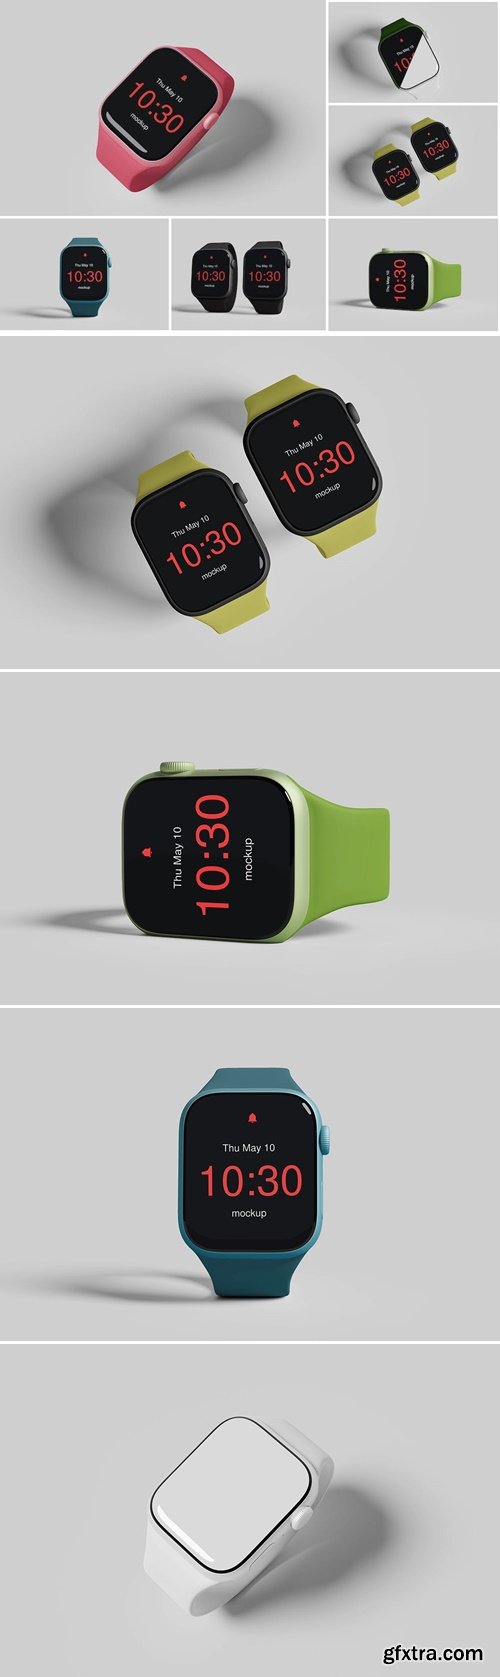 Apple Smartwatch Mockup SC63F8D